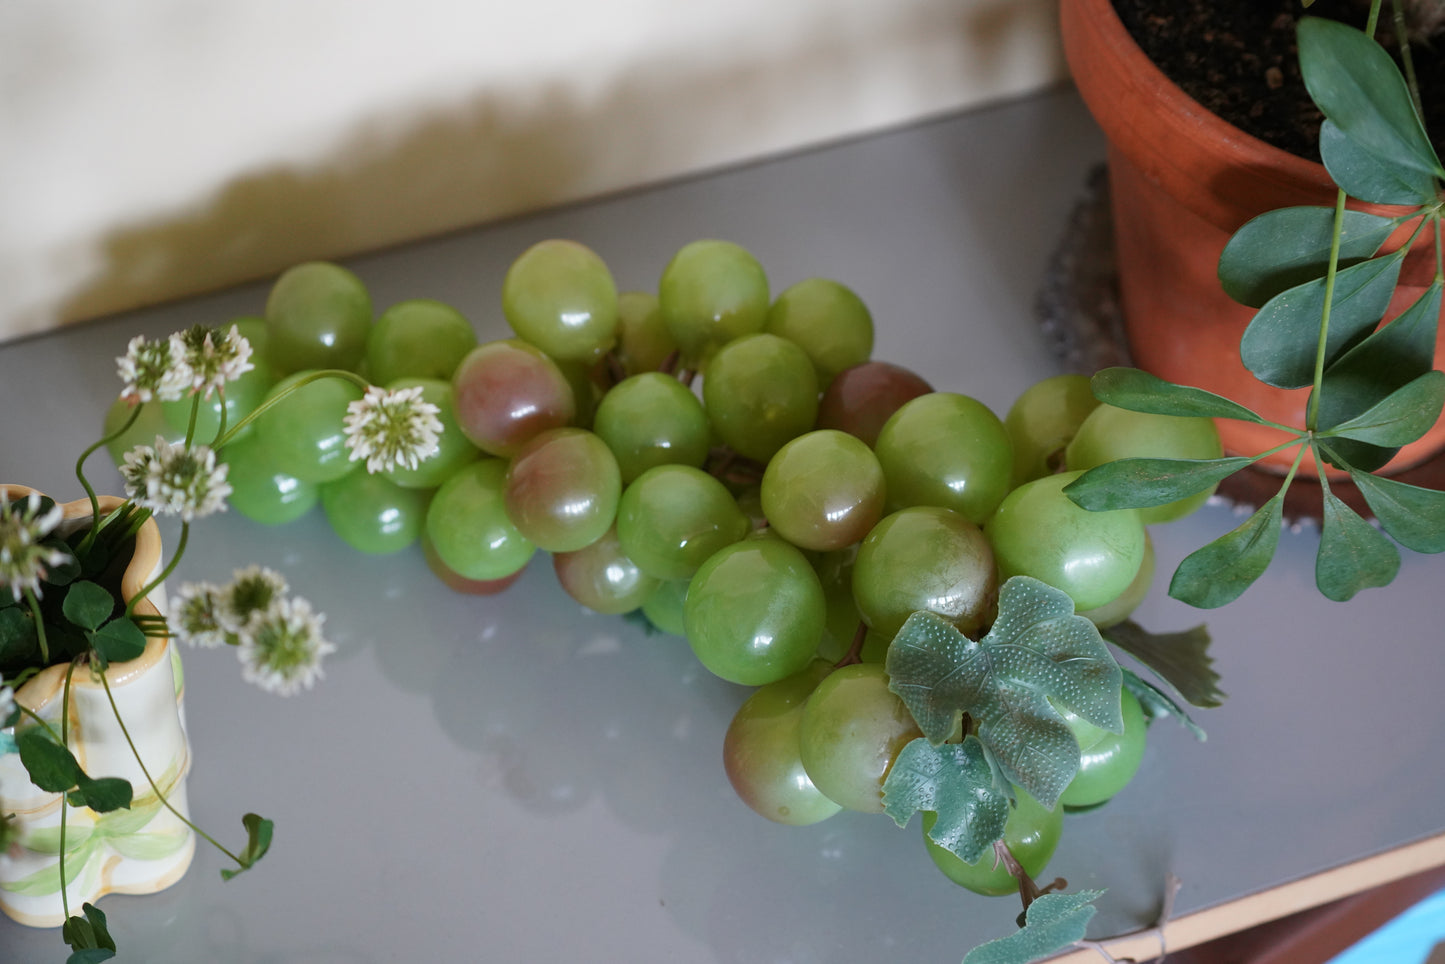 Plastic grapes